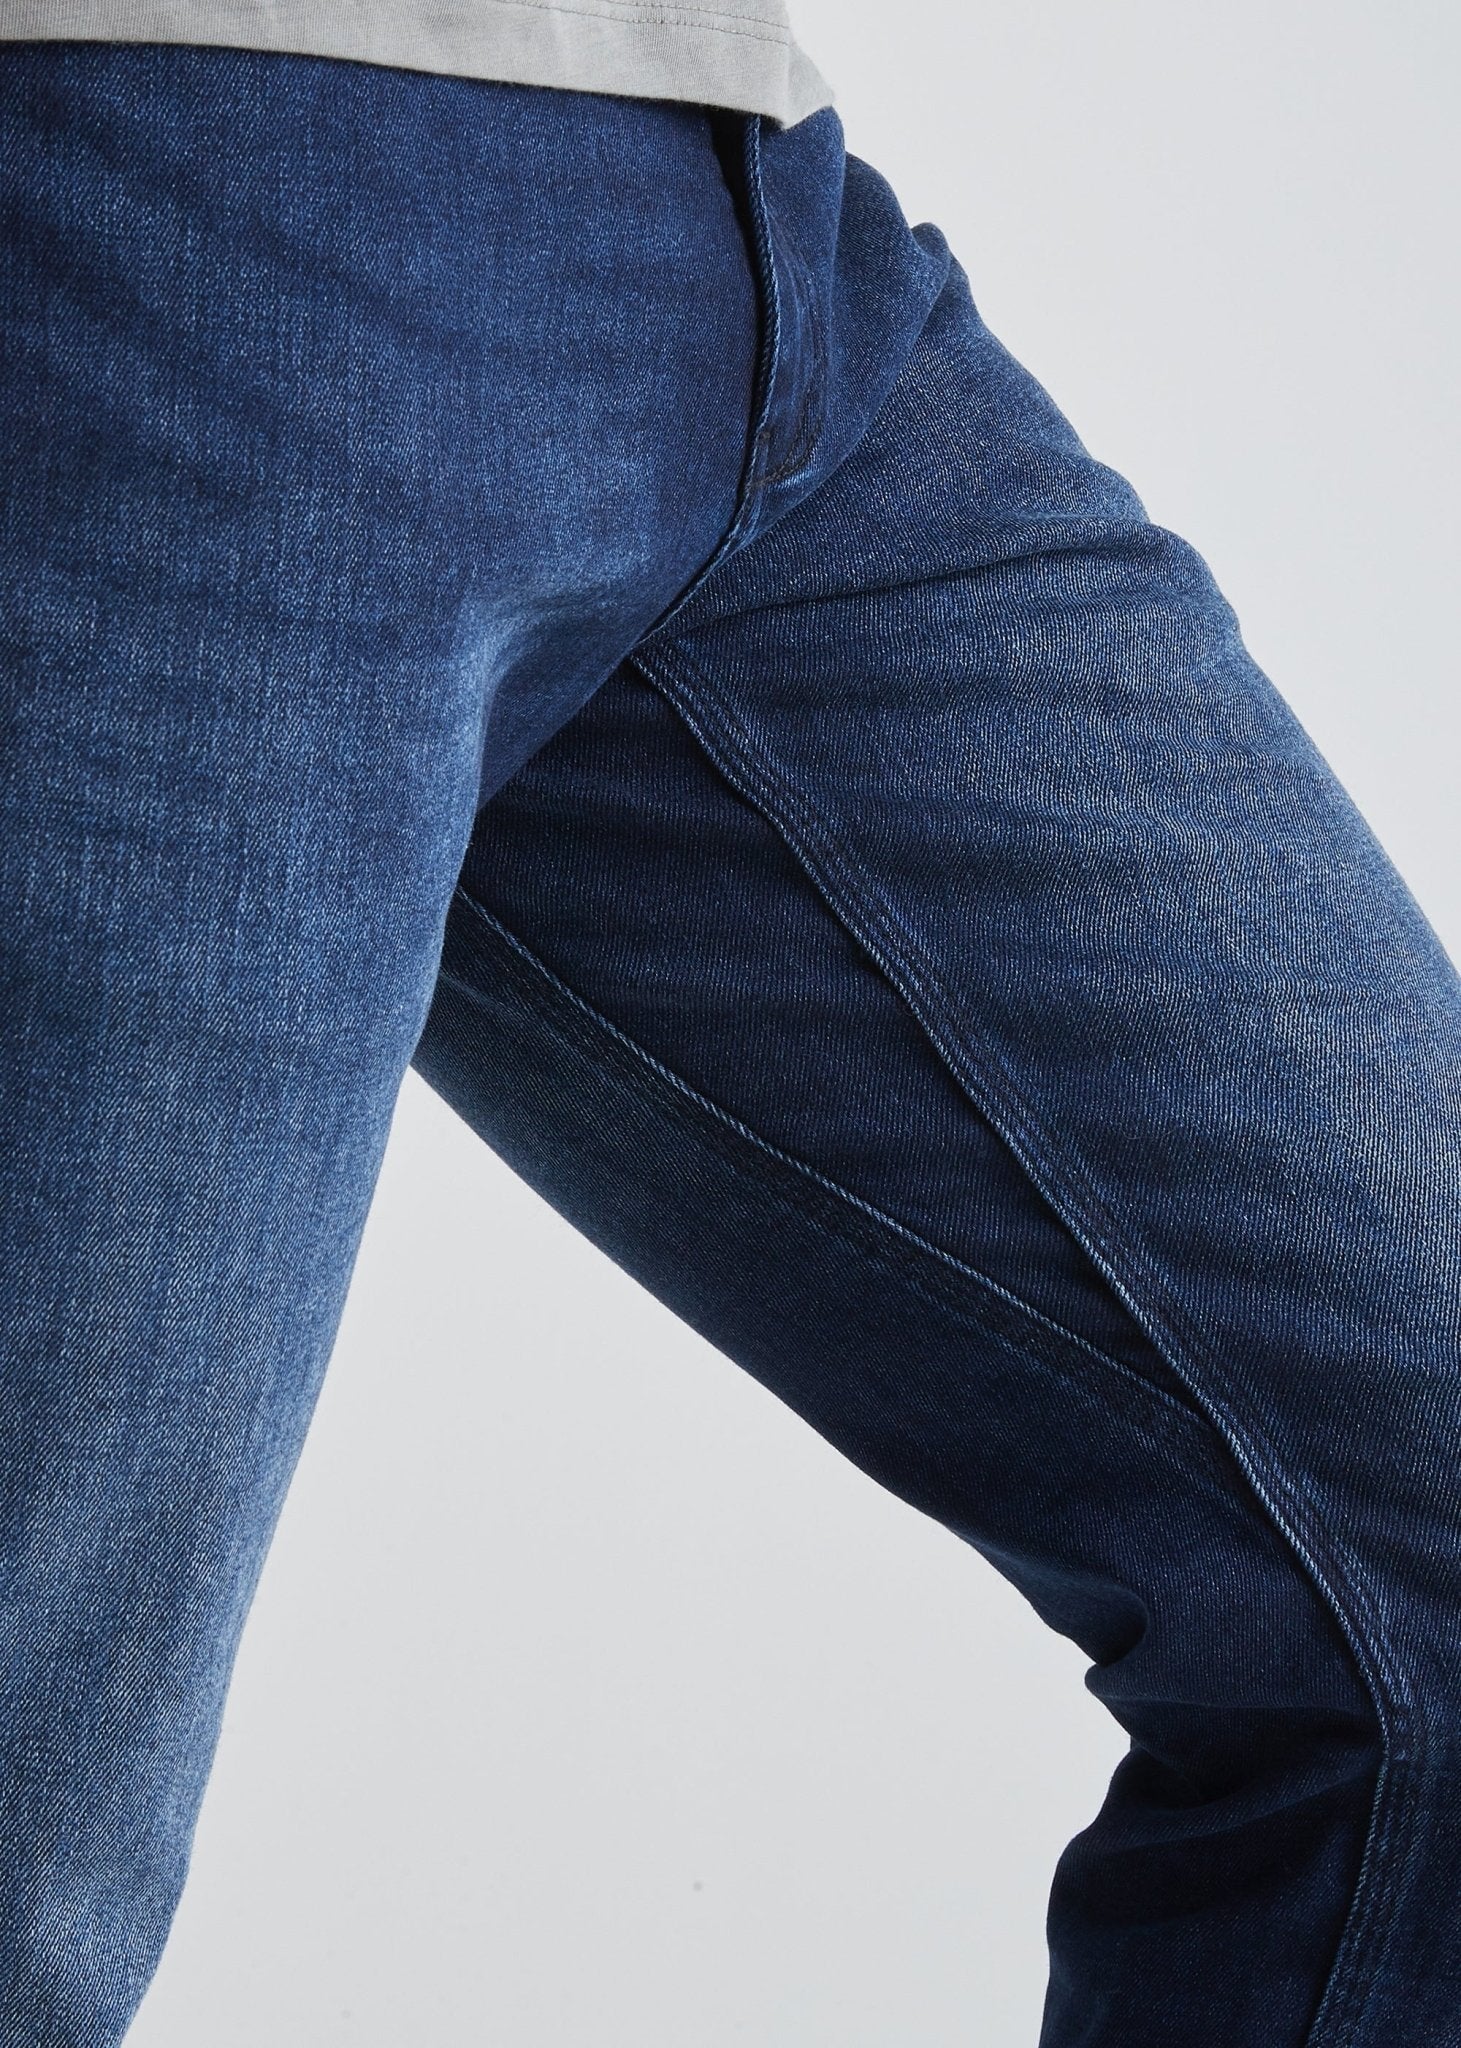 Jeans Fit Stretch Resistant Water Slim Men\'s